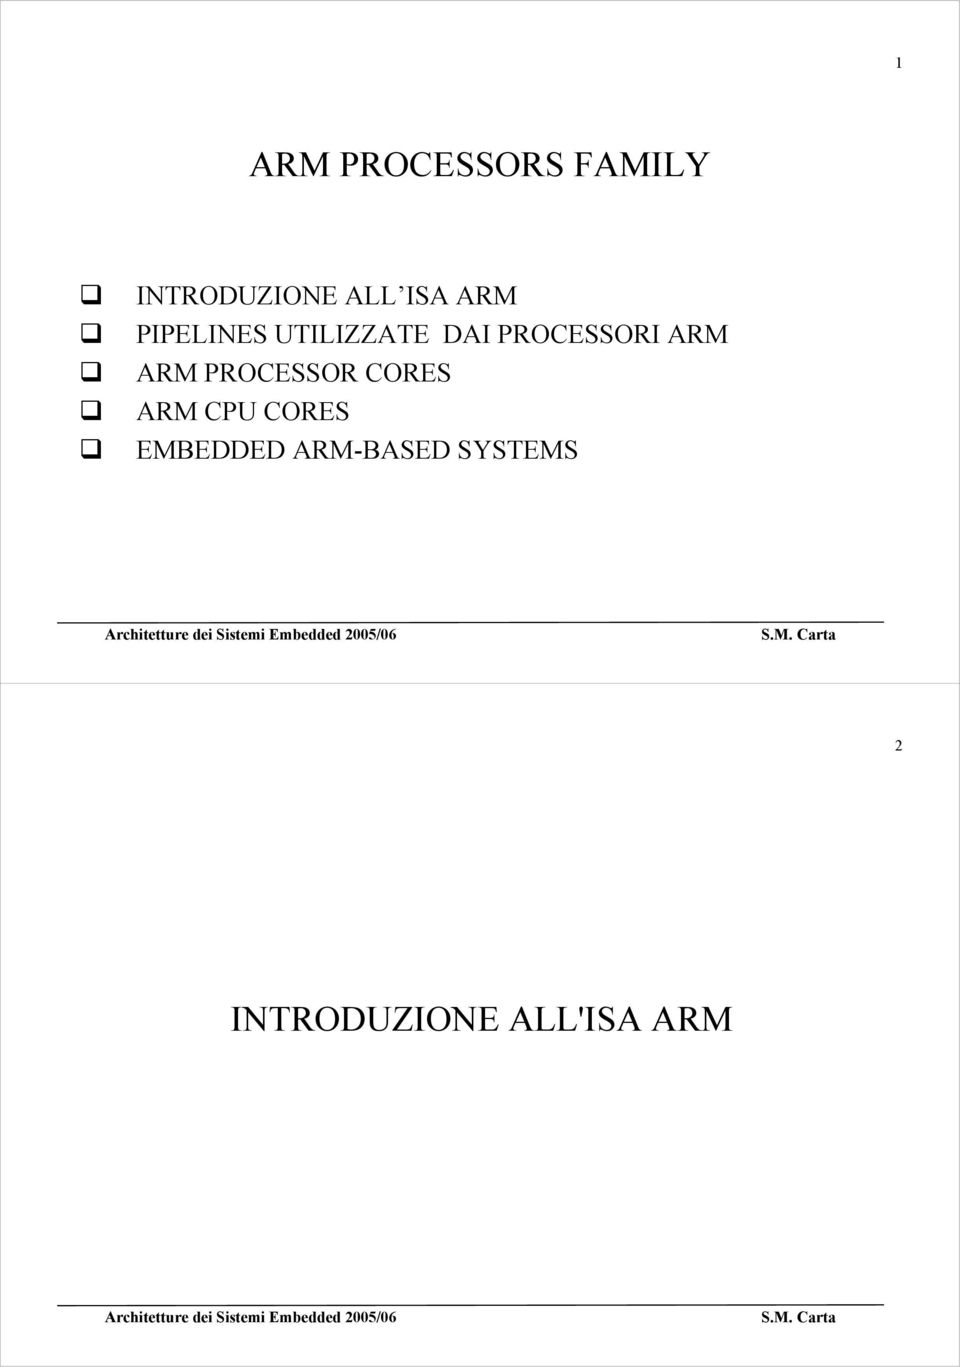 ARM ARM PROCESSOR CORES ARM CPU CORES